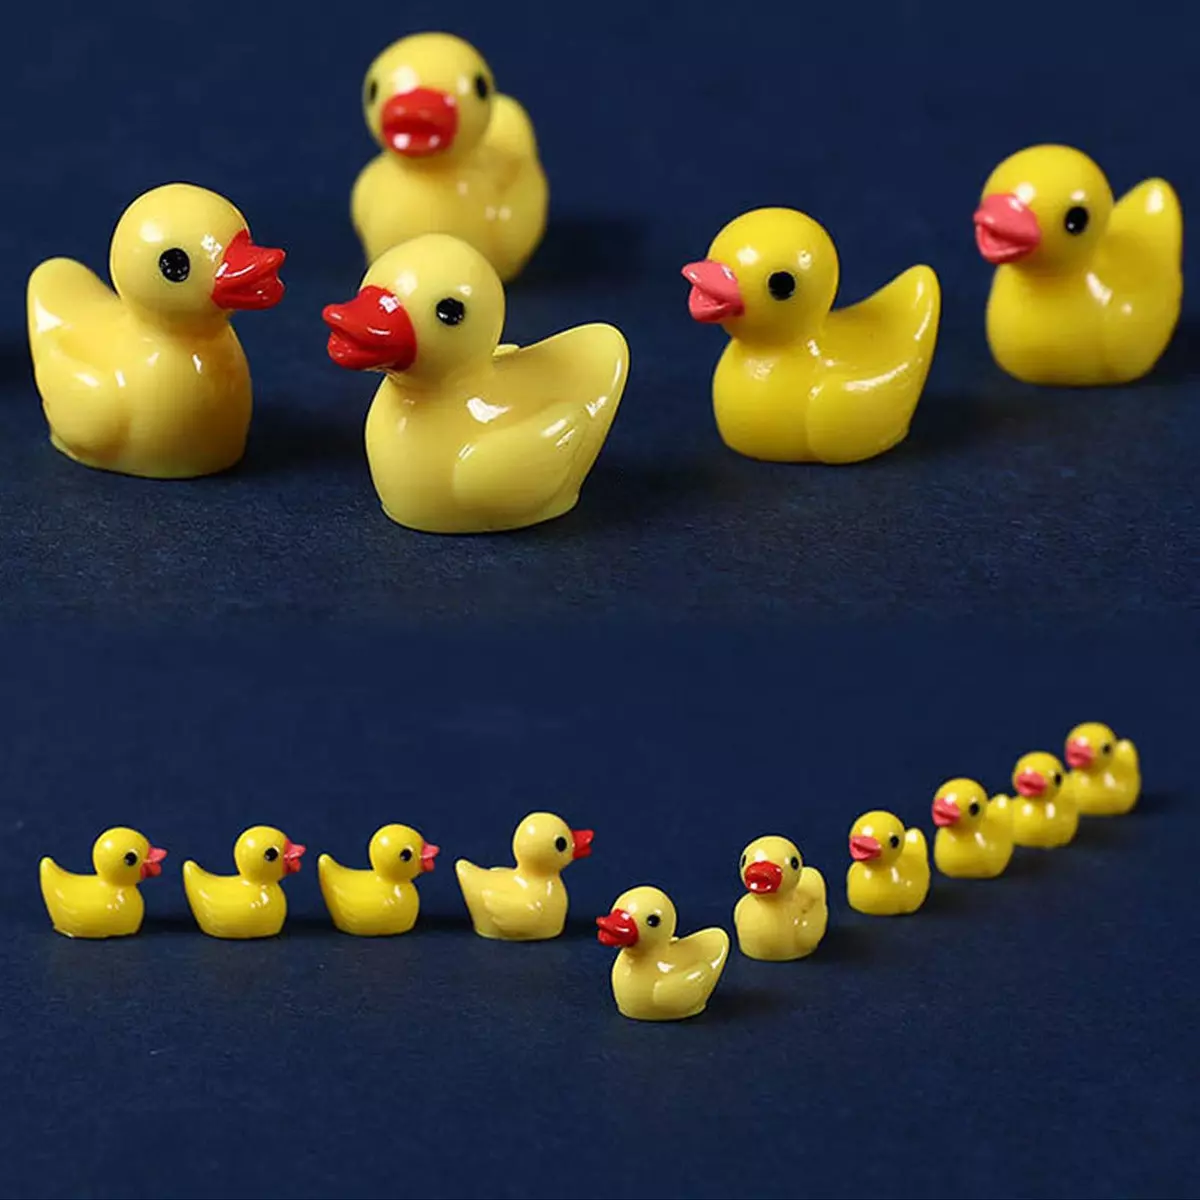 100 Pcs Resin Micro Landscape Mini Garden Figurine Tiny Ducks Figures